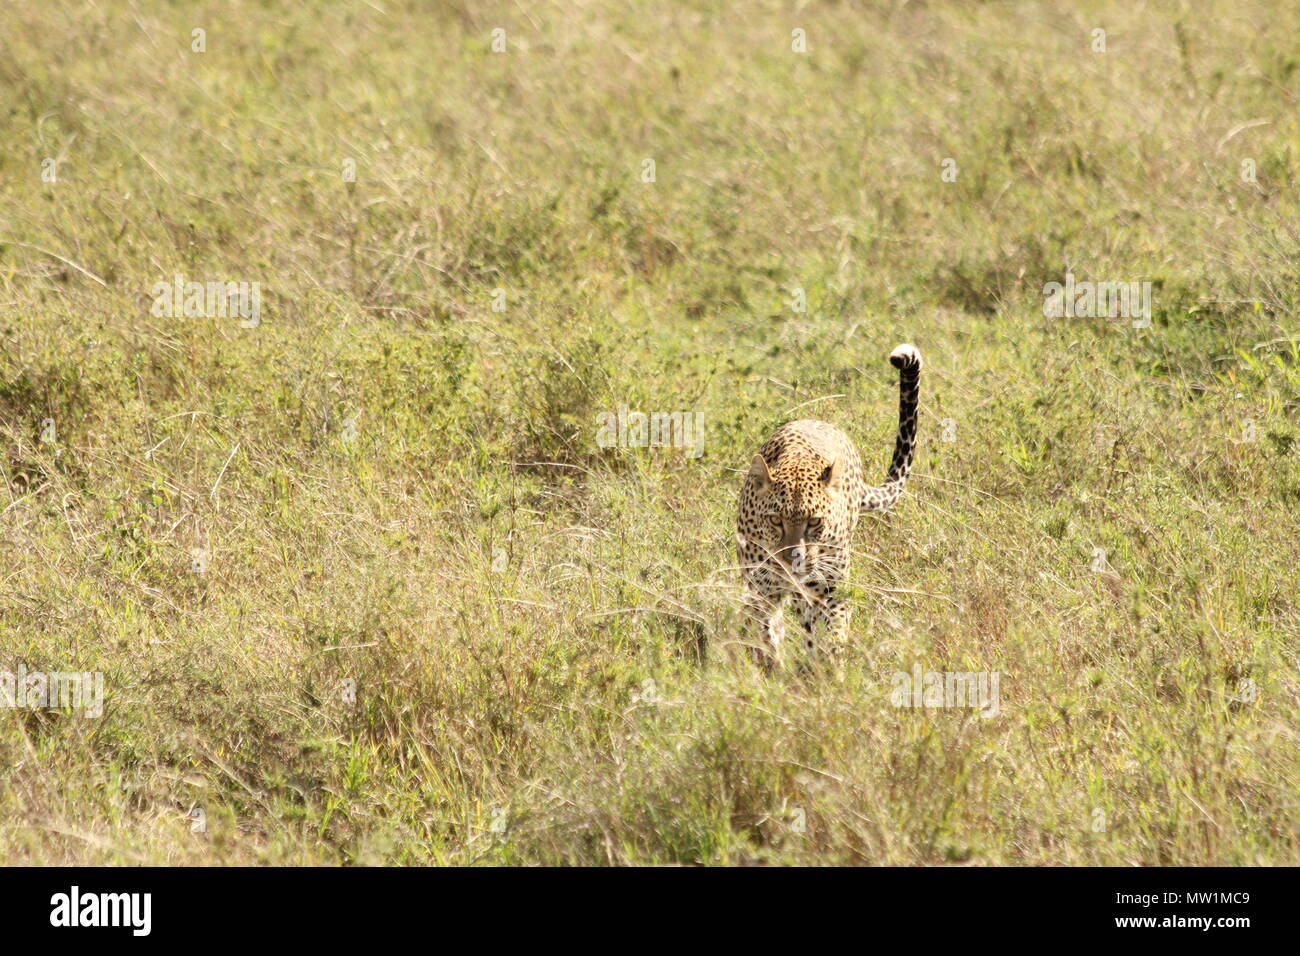 Leopard walking over the savannah Stock Photo